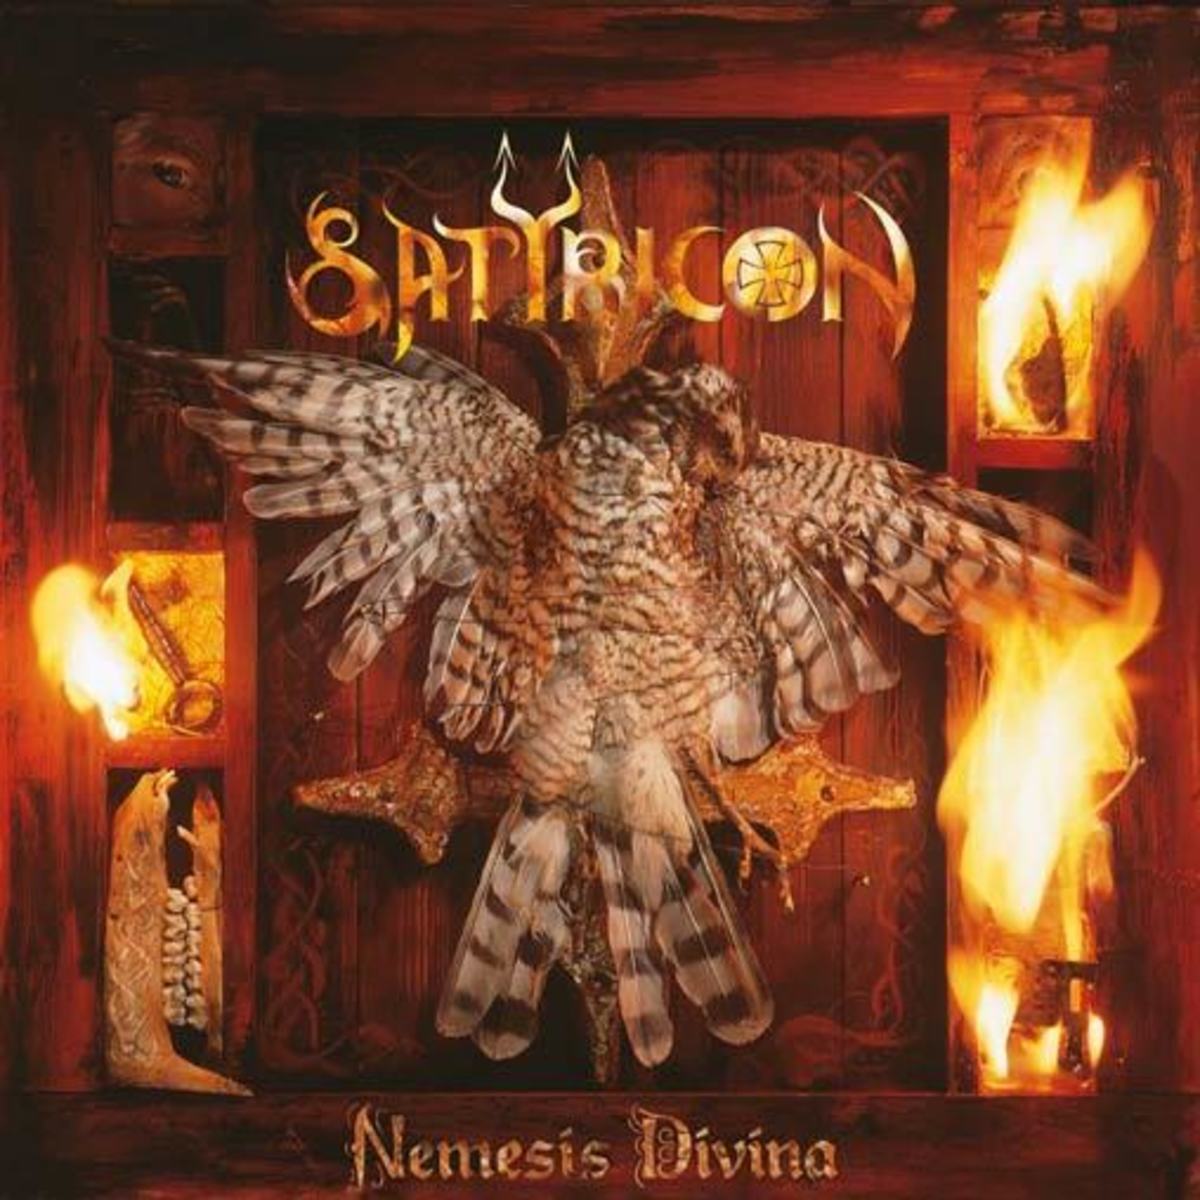 revisiting-the-album-nemesis-divina-by-satyricon